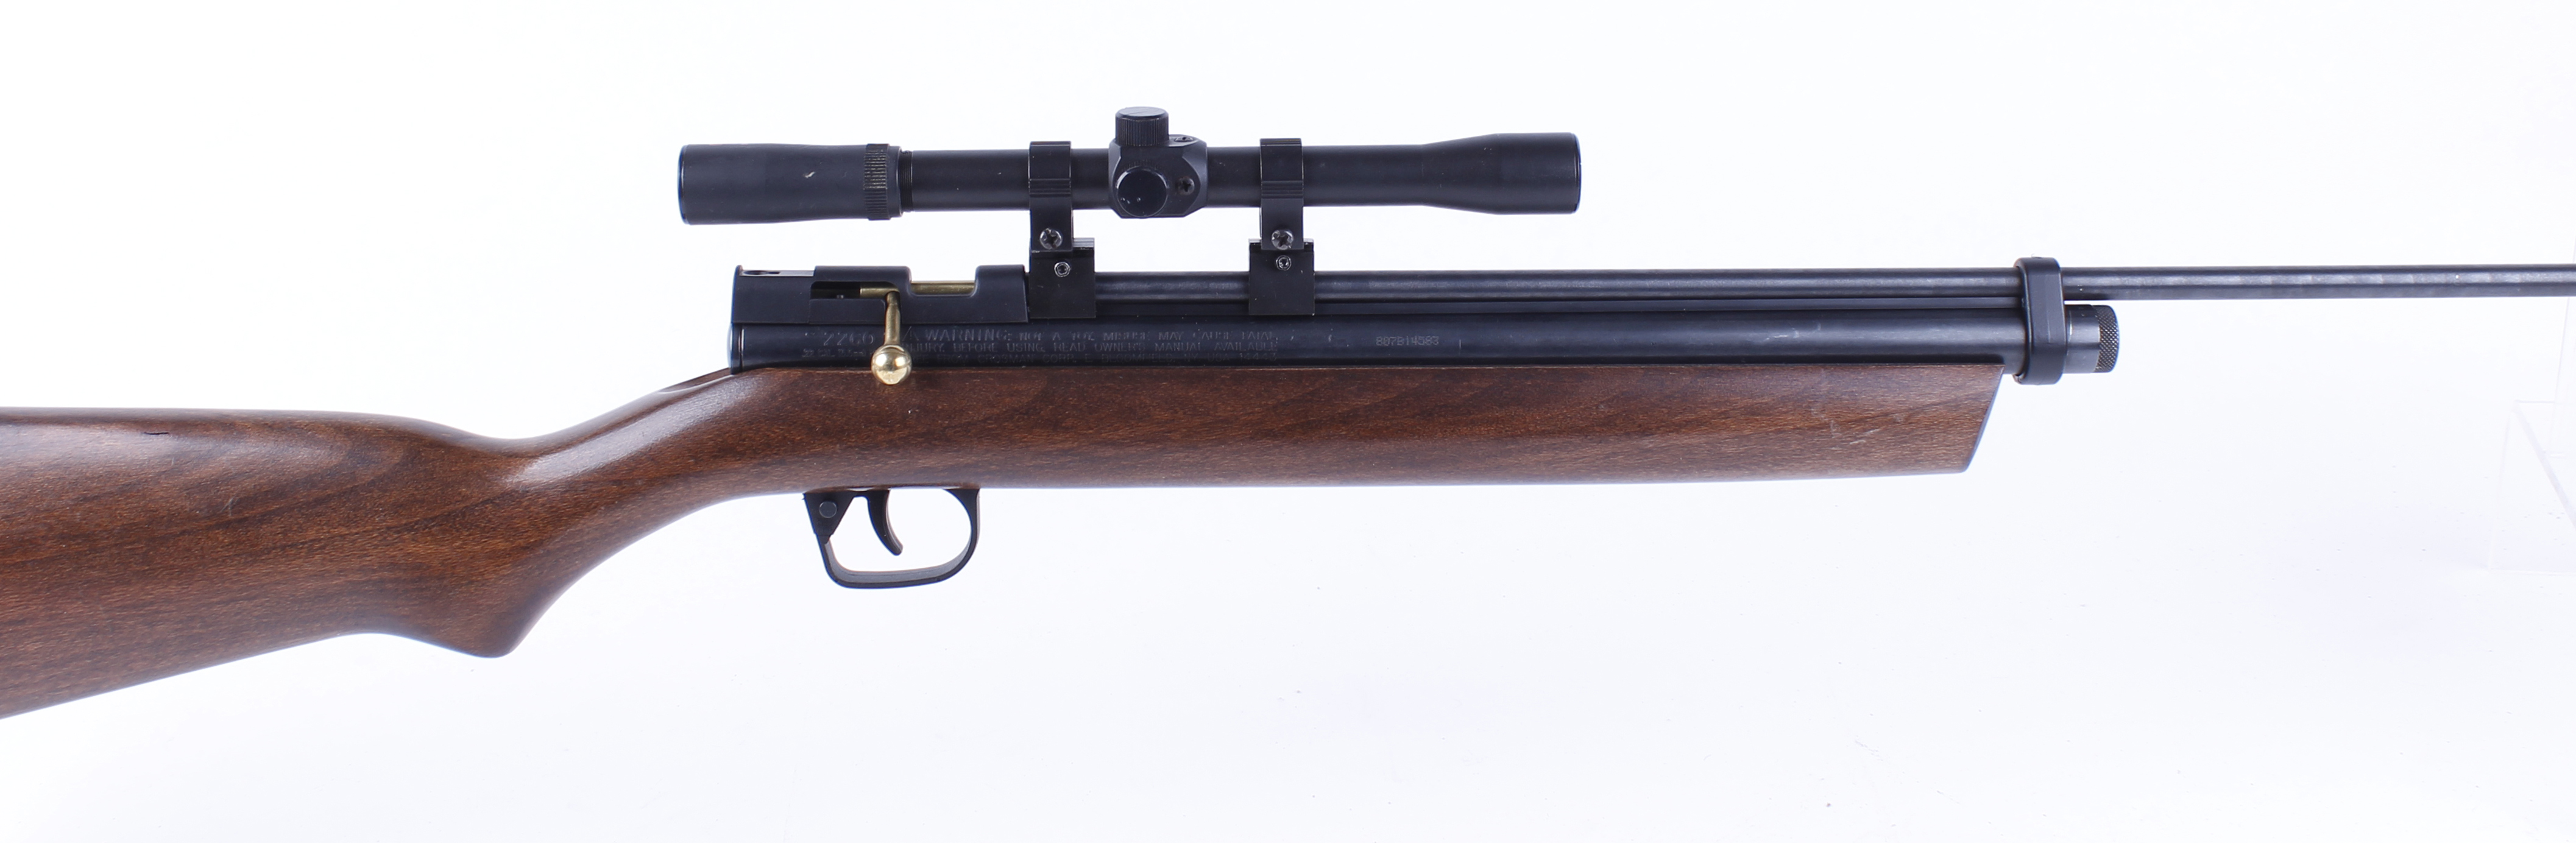 22 Crosman Model 2260 Rabbit Stopper Bolt Action Air Rifle Mounted Scope No 807b14583 7555